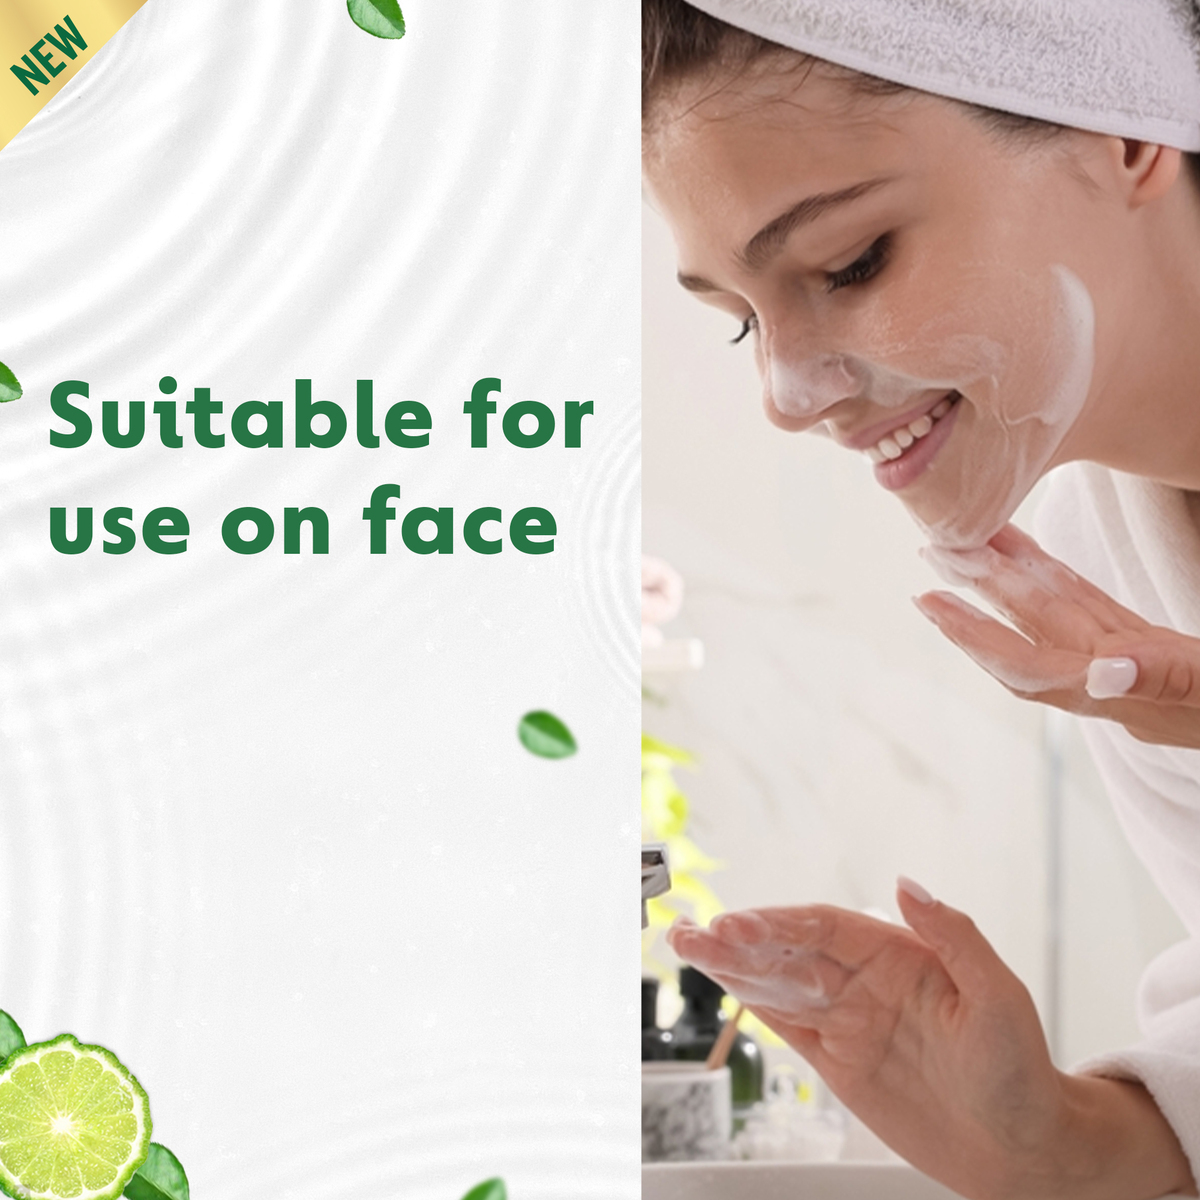 Dettol Activ-Botany Green Tea & Bergamot Antibacterial Bar Soap Value Pack 4 x 150 g